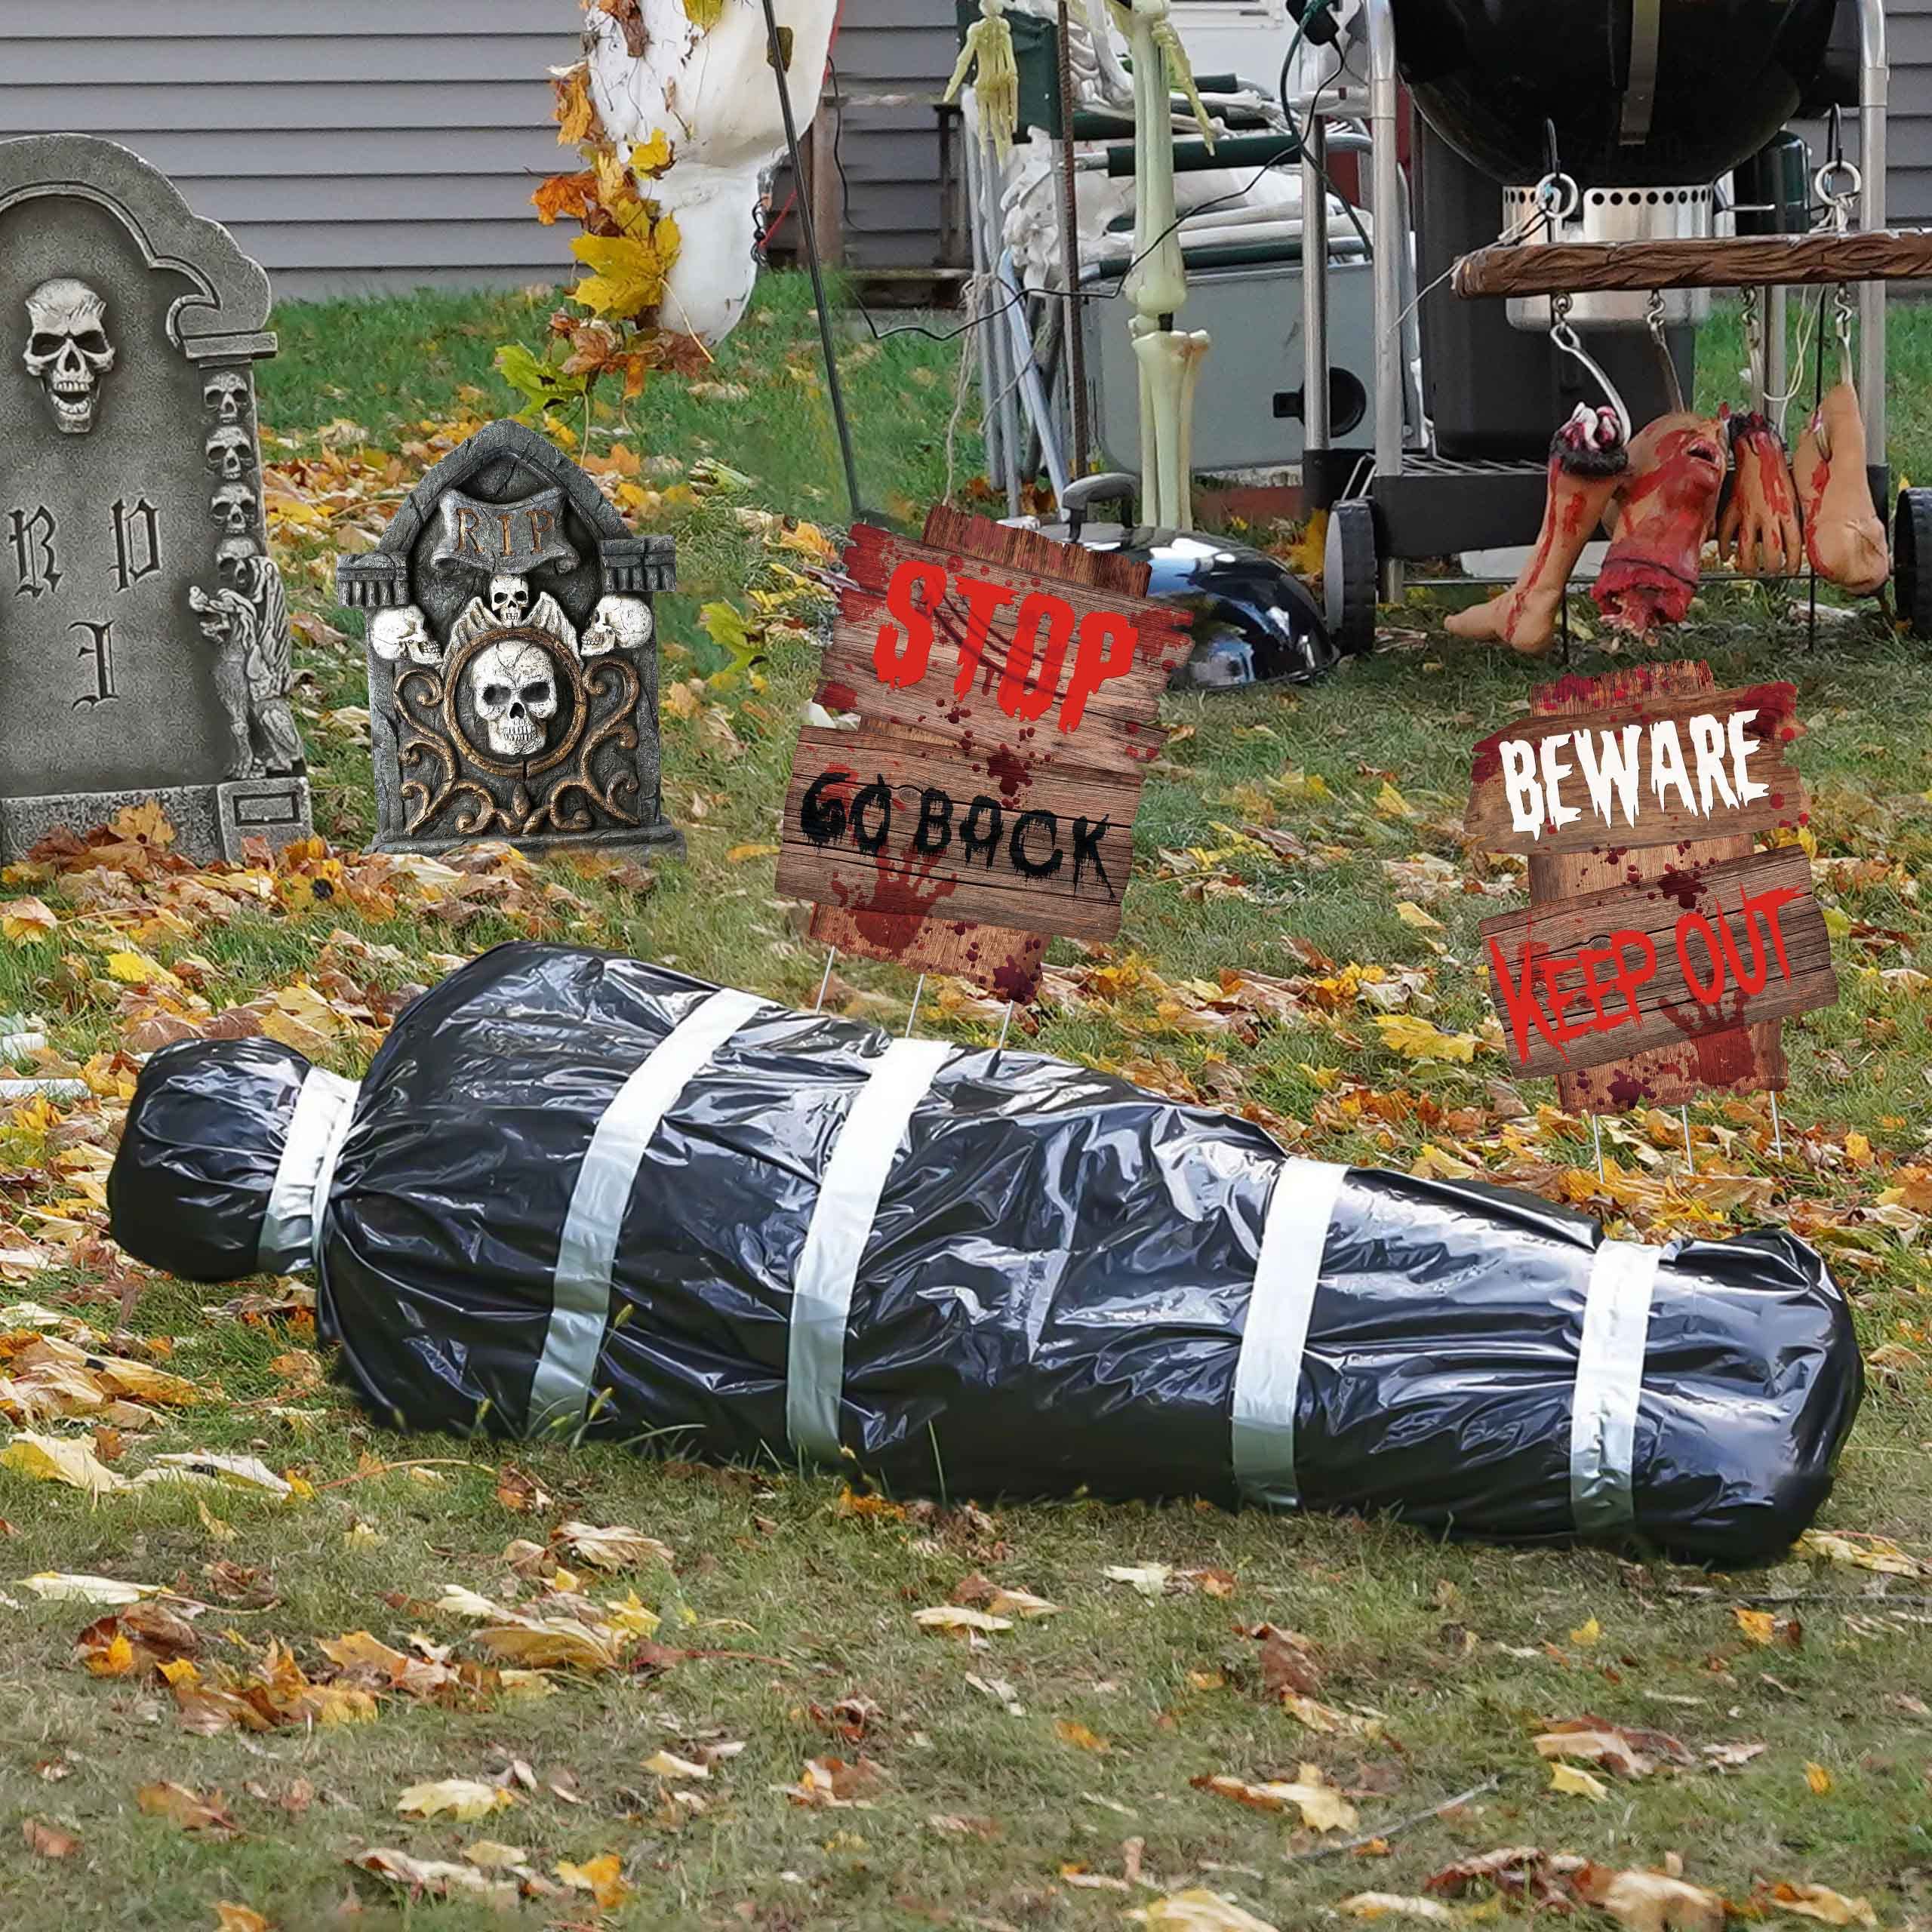 5ft Hanging Corpse Dead Victim Props Halloween Decorations